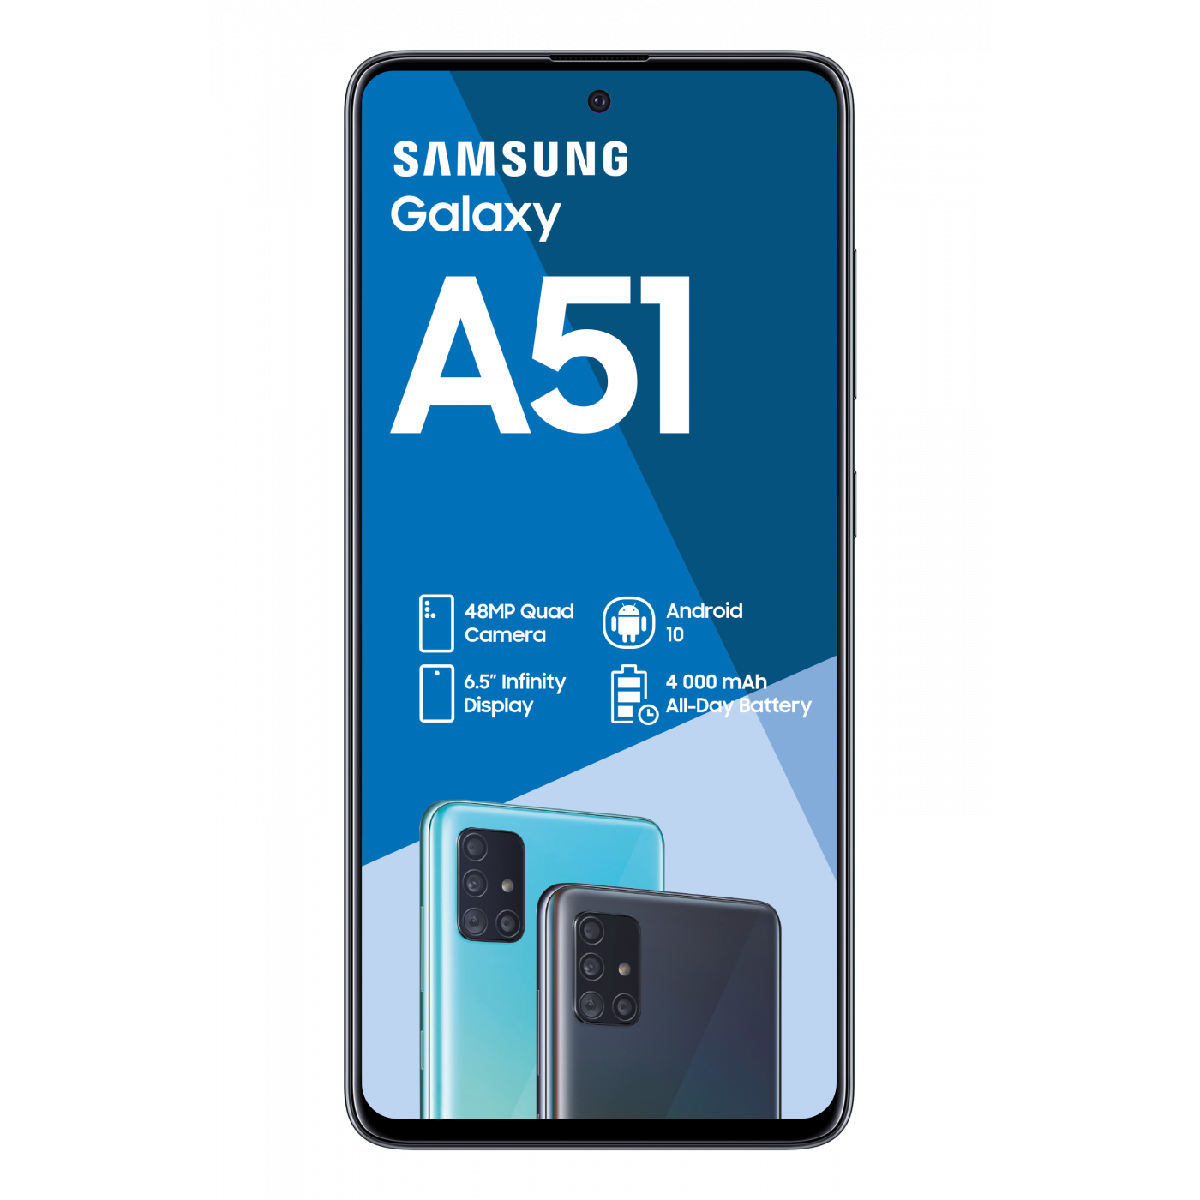  Samsung Galaxy A51 (Vodacom)